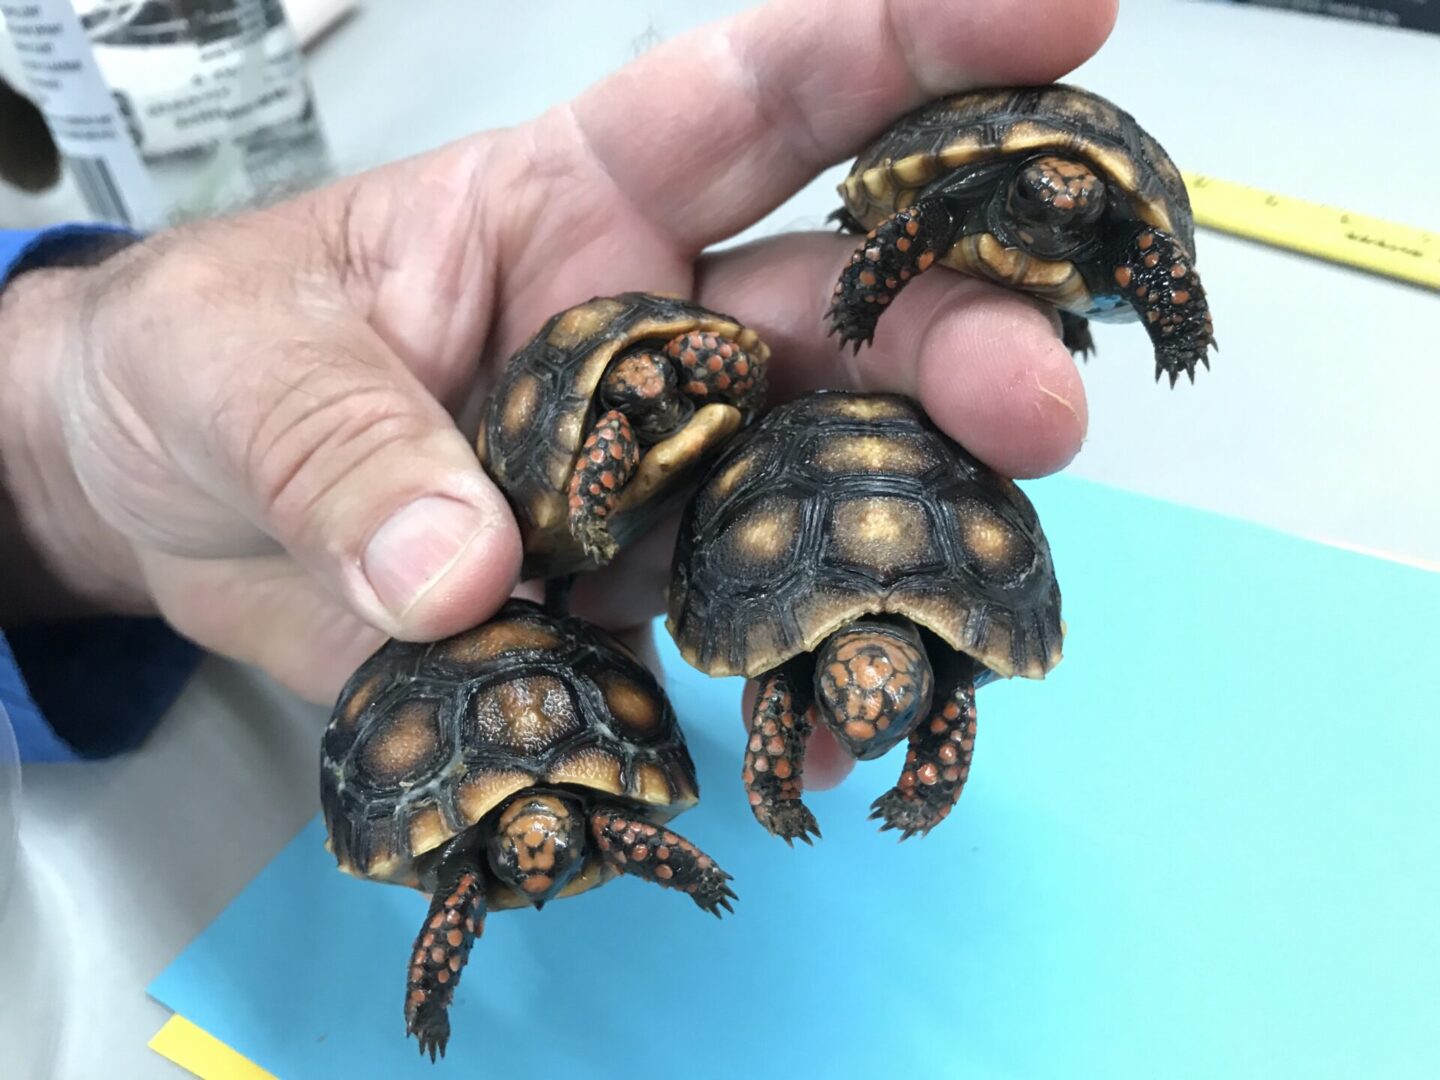 A hand holding three baby tortoises